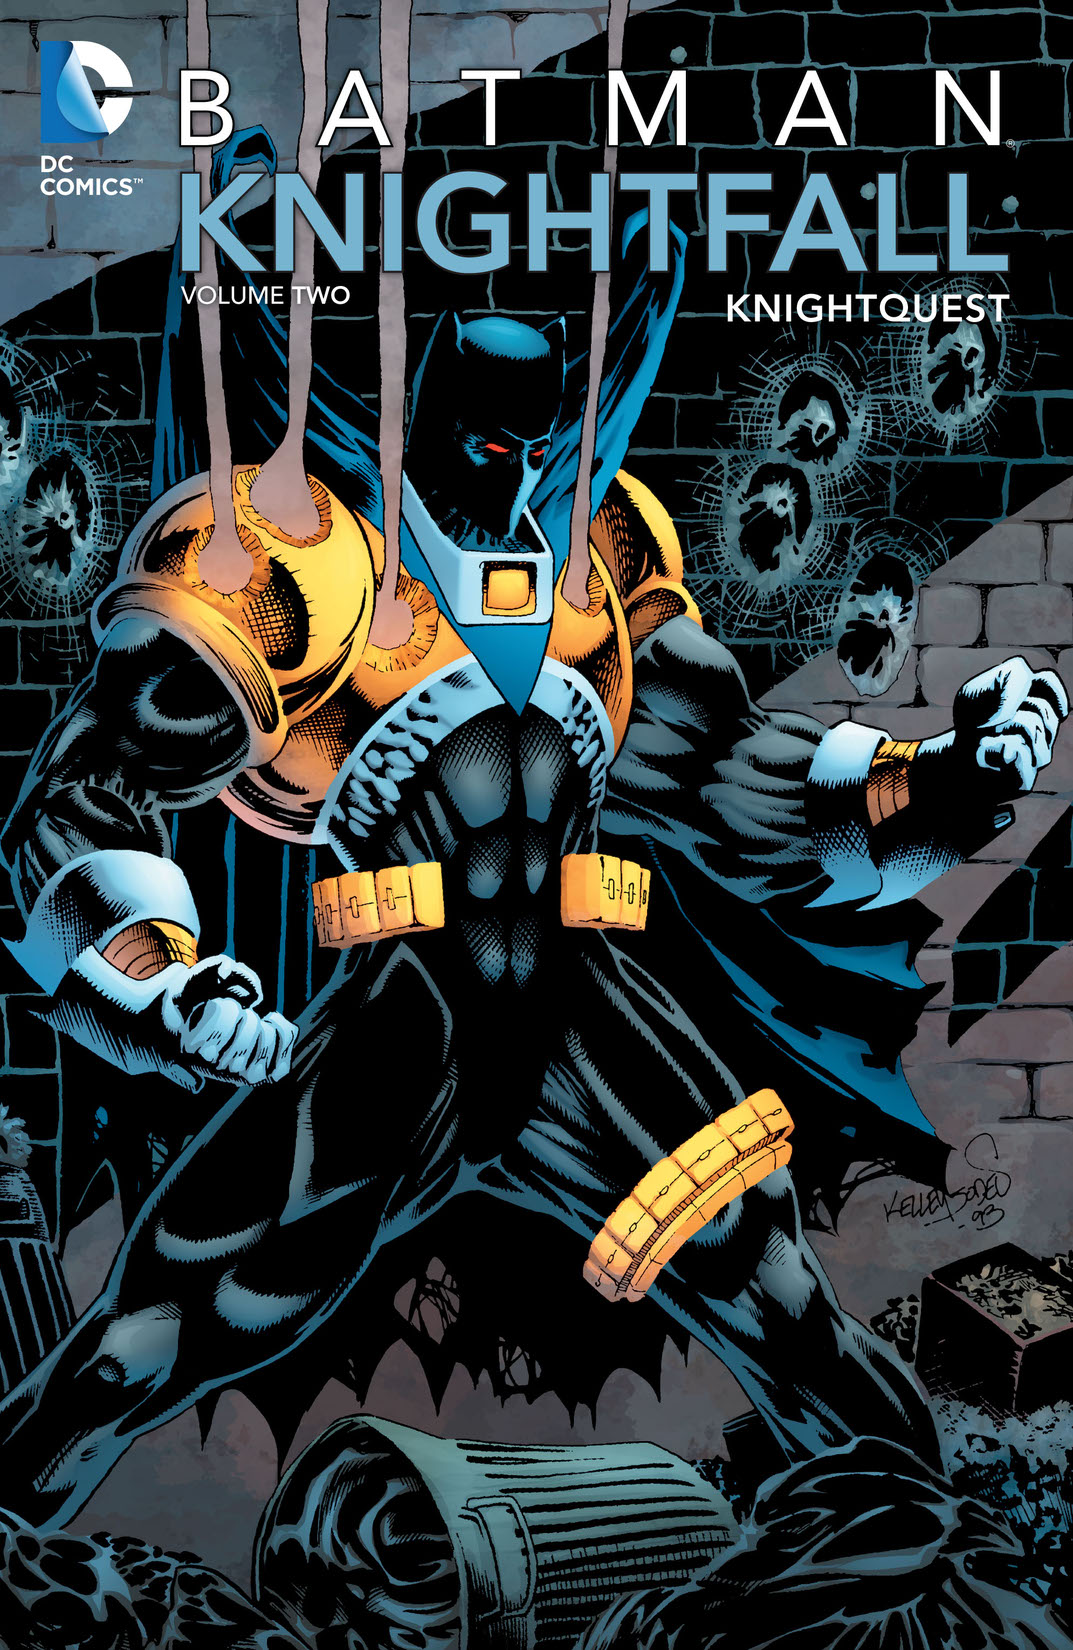 Batman: Knightfall Vol. 2: Knightquest preview images